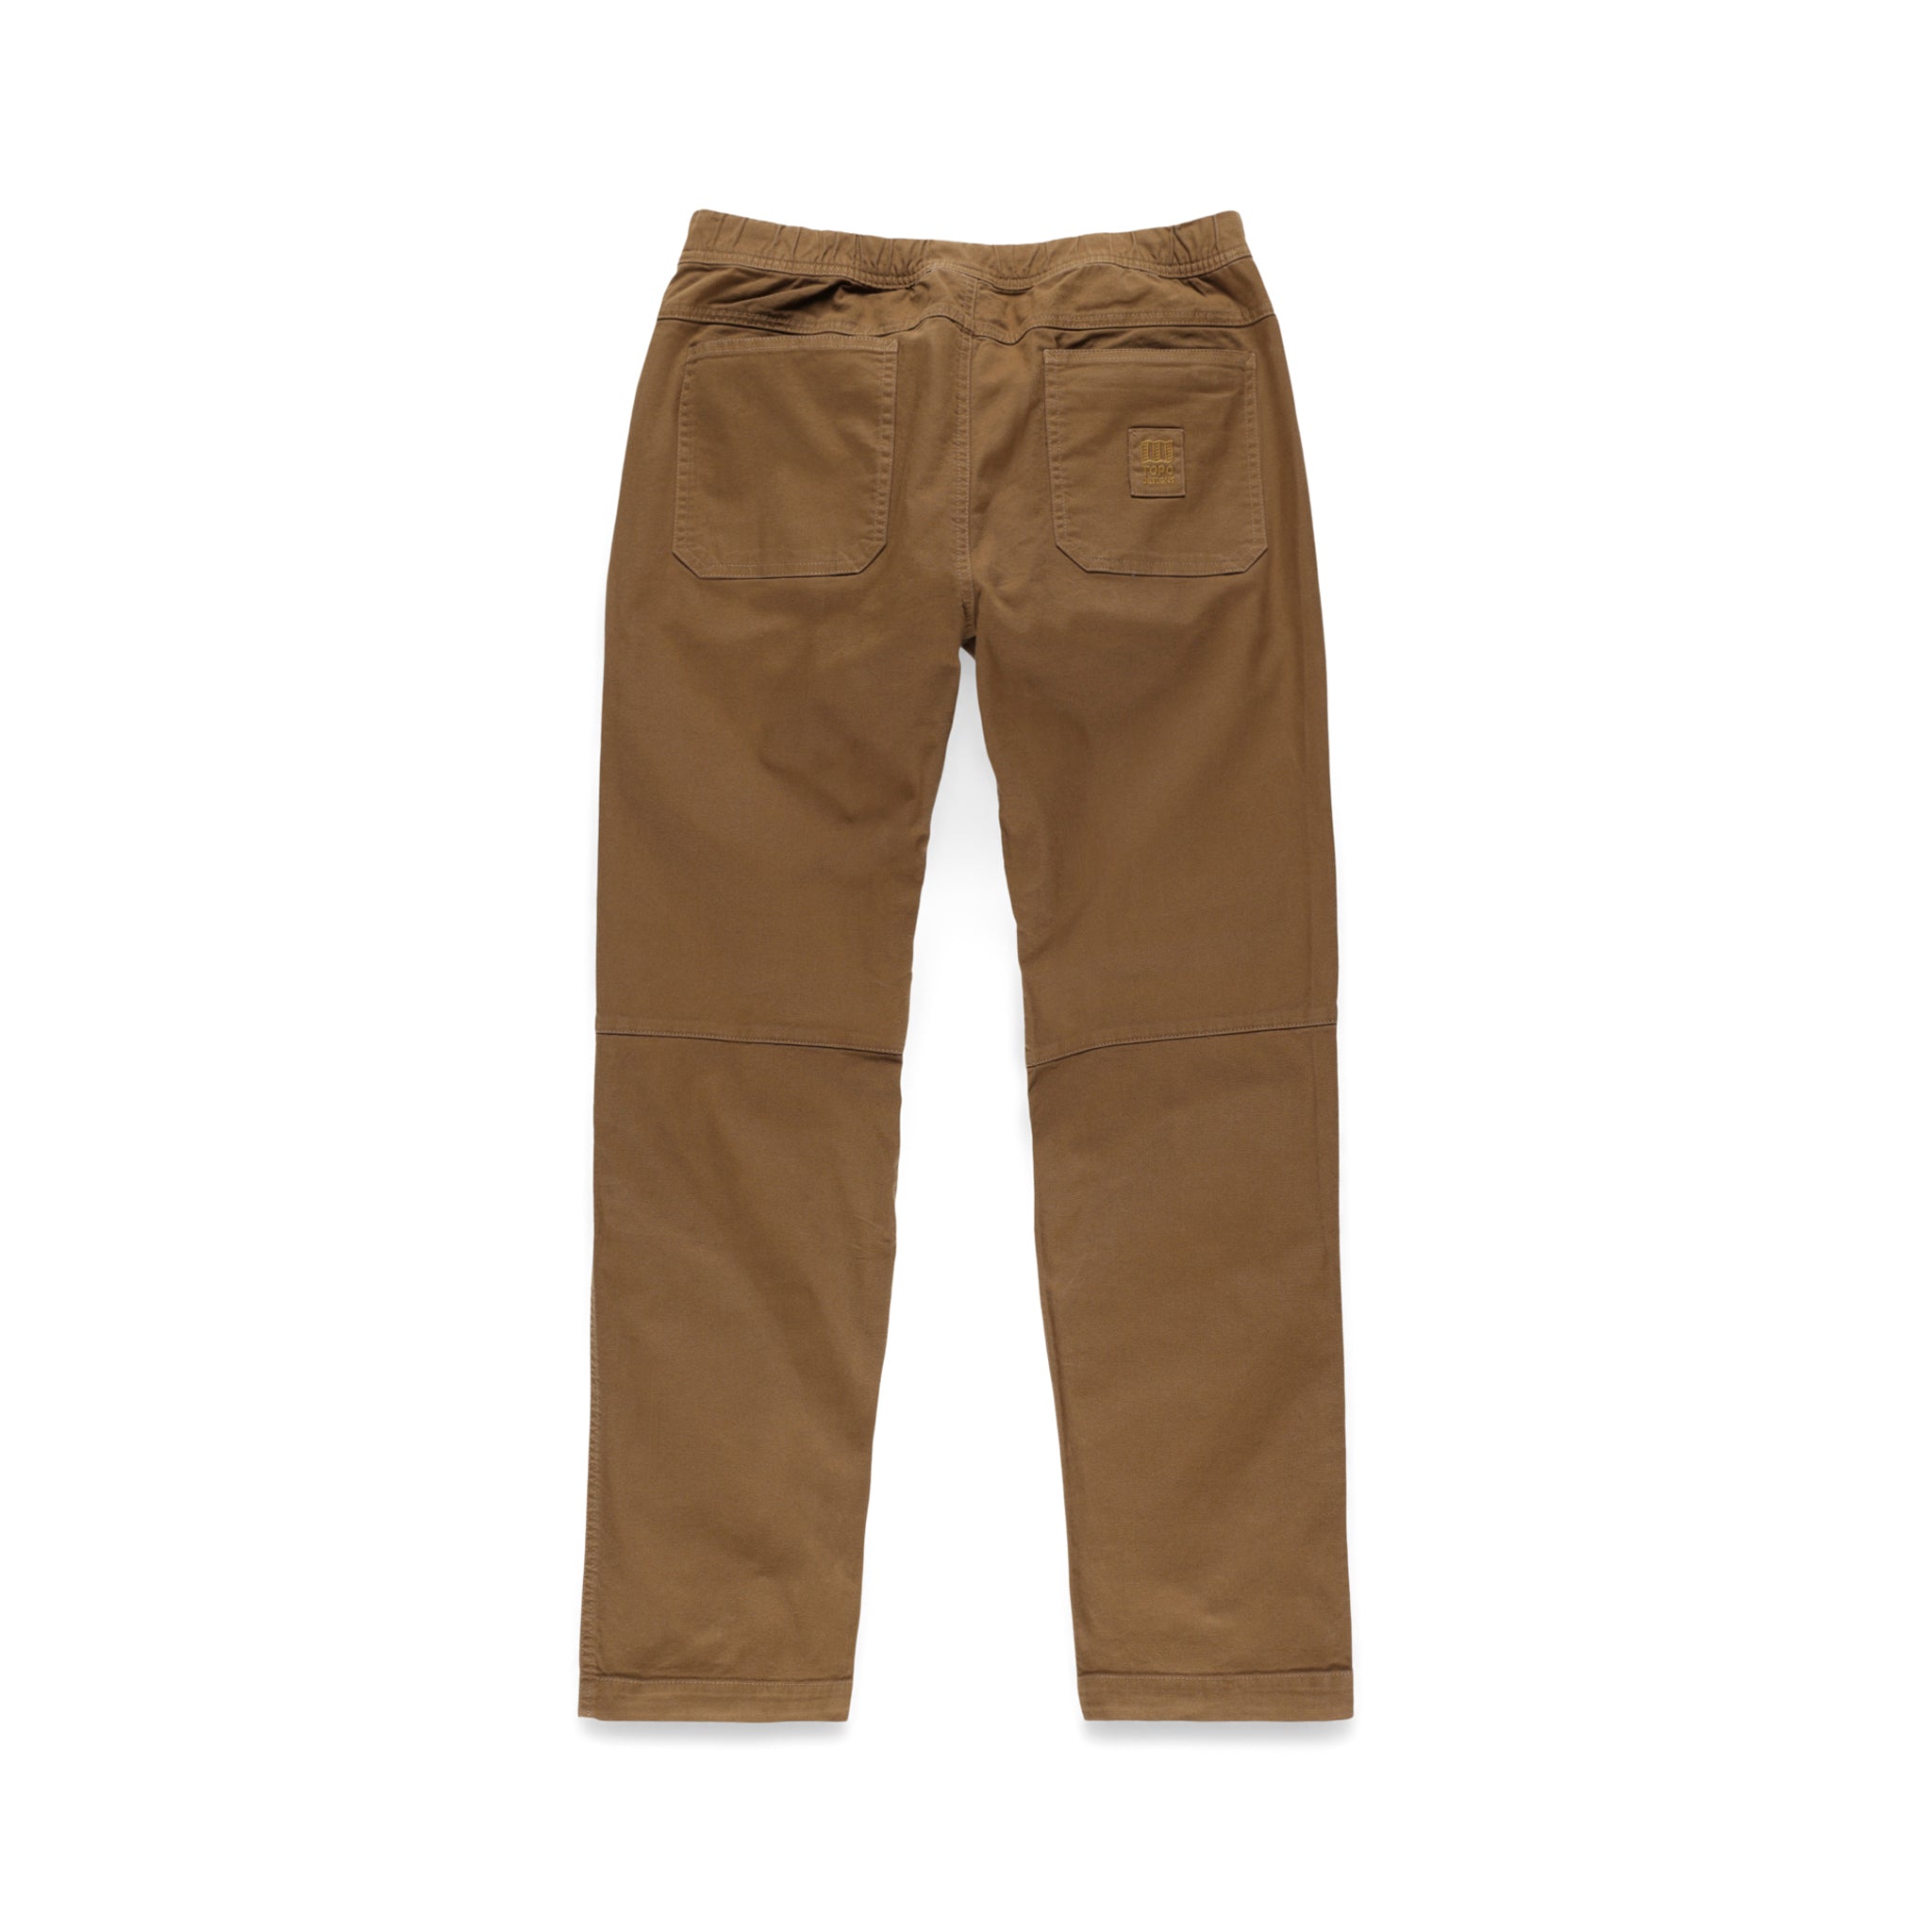 Back of Topo Designs Men's Dirt Pants 100% organic cotton drawstring waist in "Dark Khaki" brown.